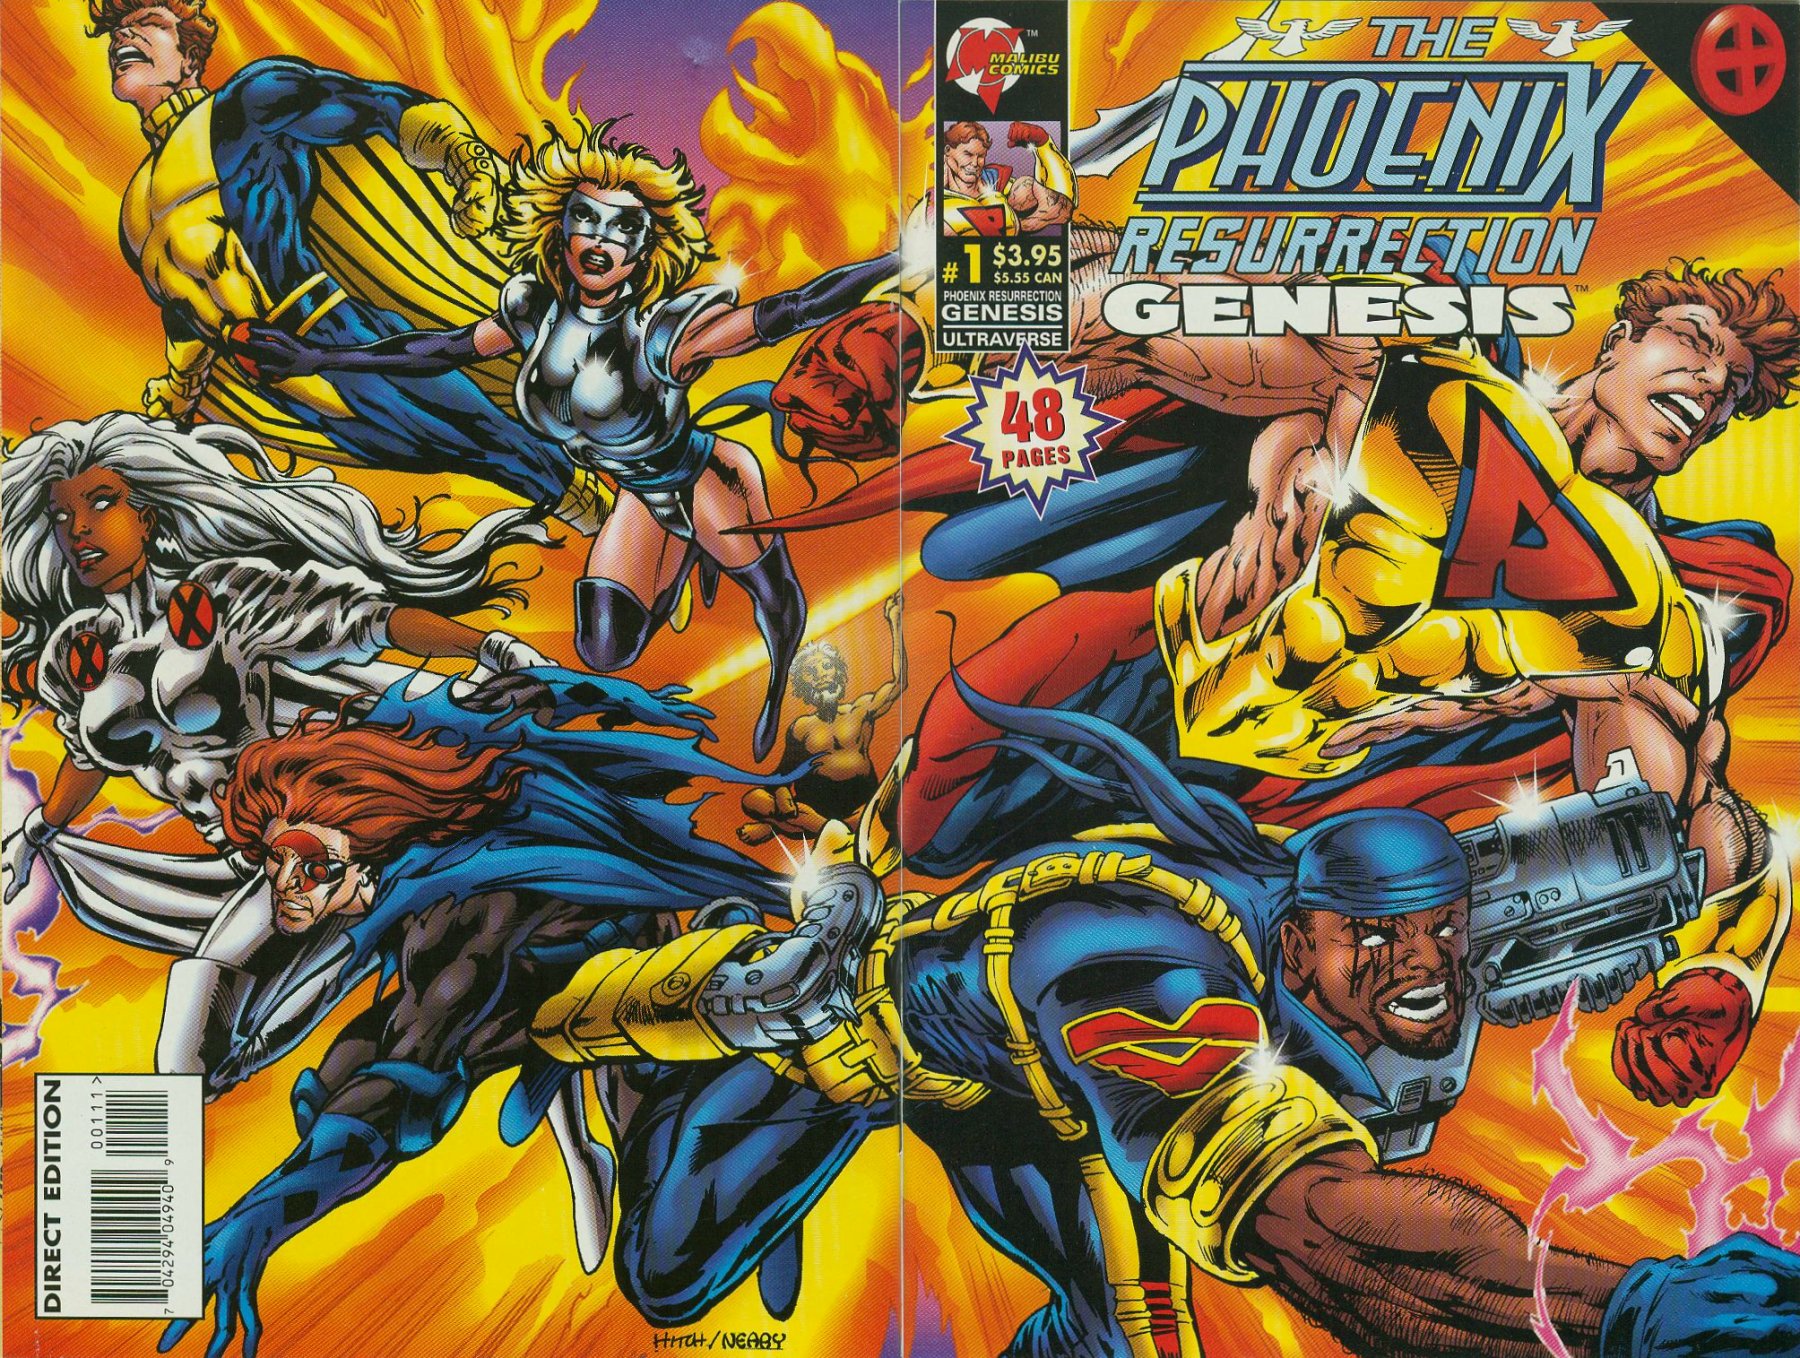 Read online The Phoenix Resurrection: Genesis comic -  Issue # Full - 3